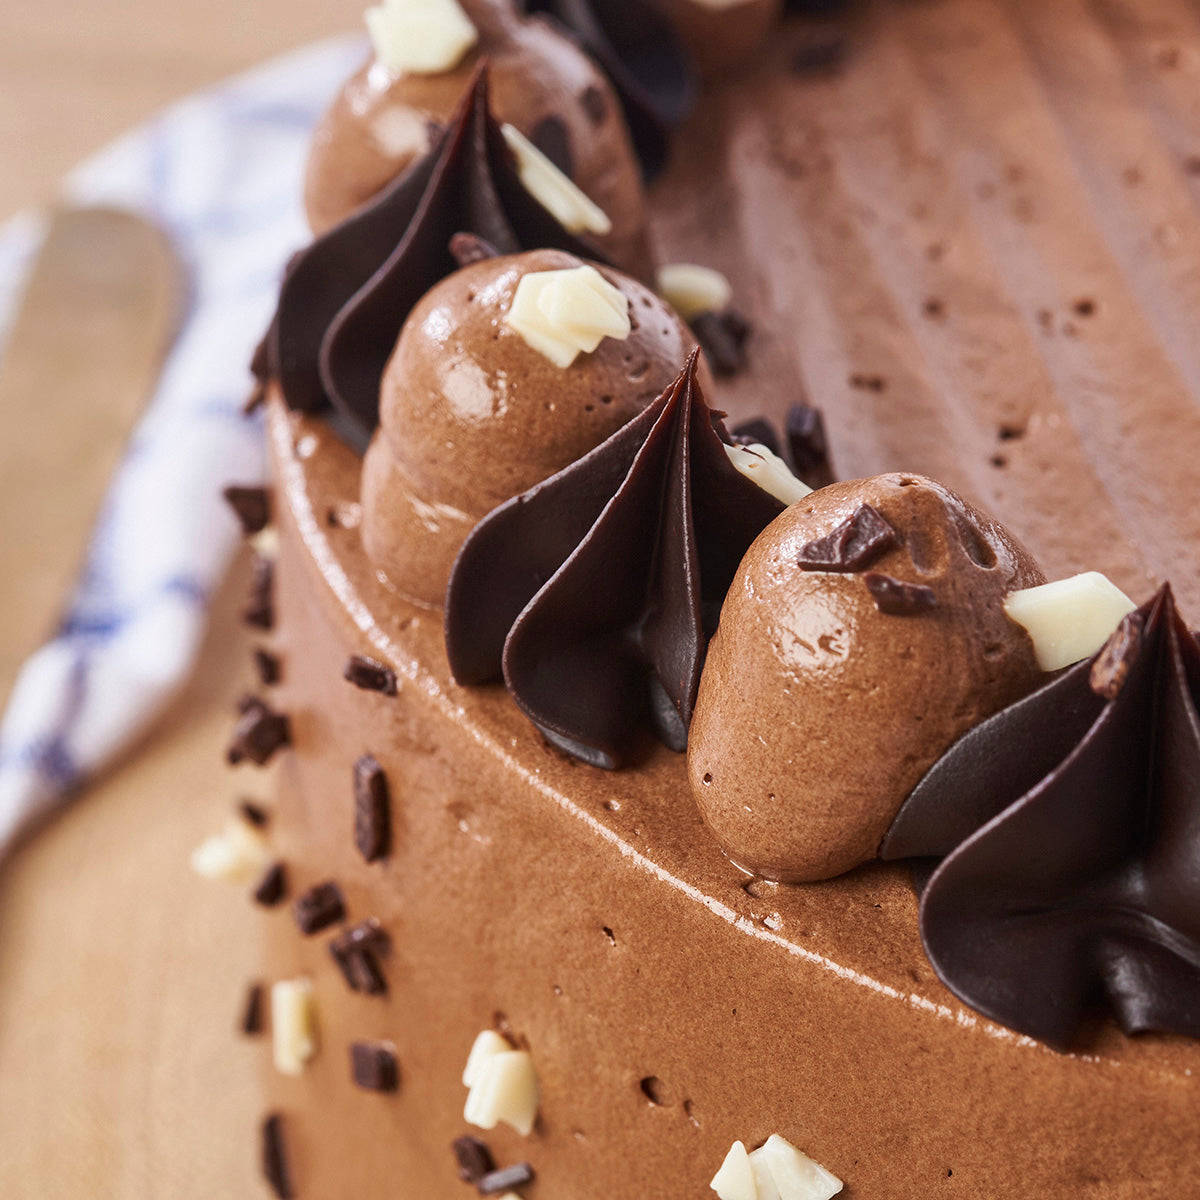 Good Ol’ Chocolate Cake